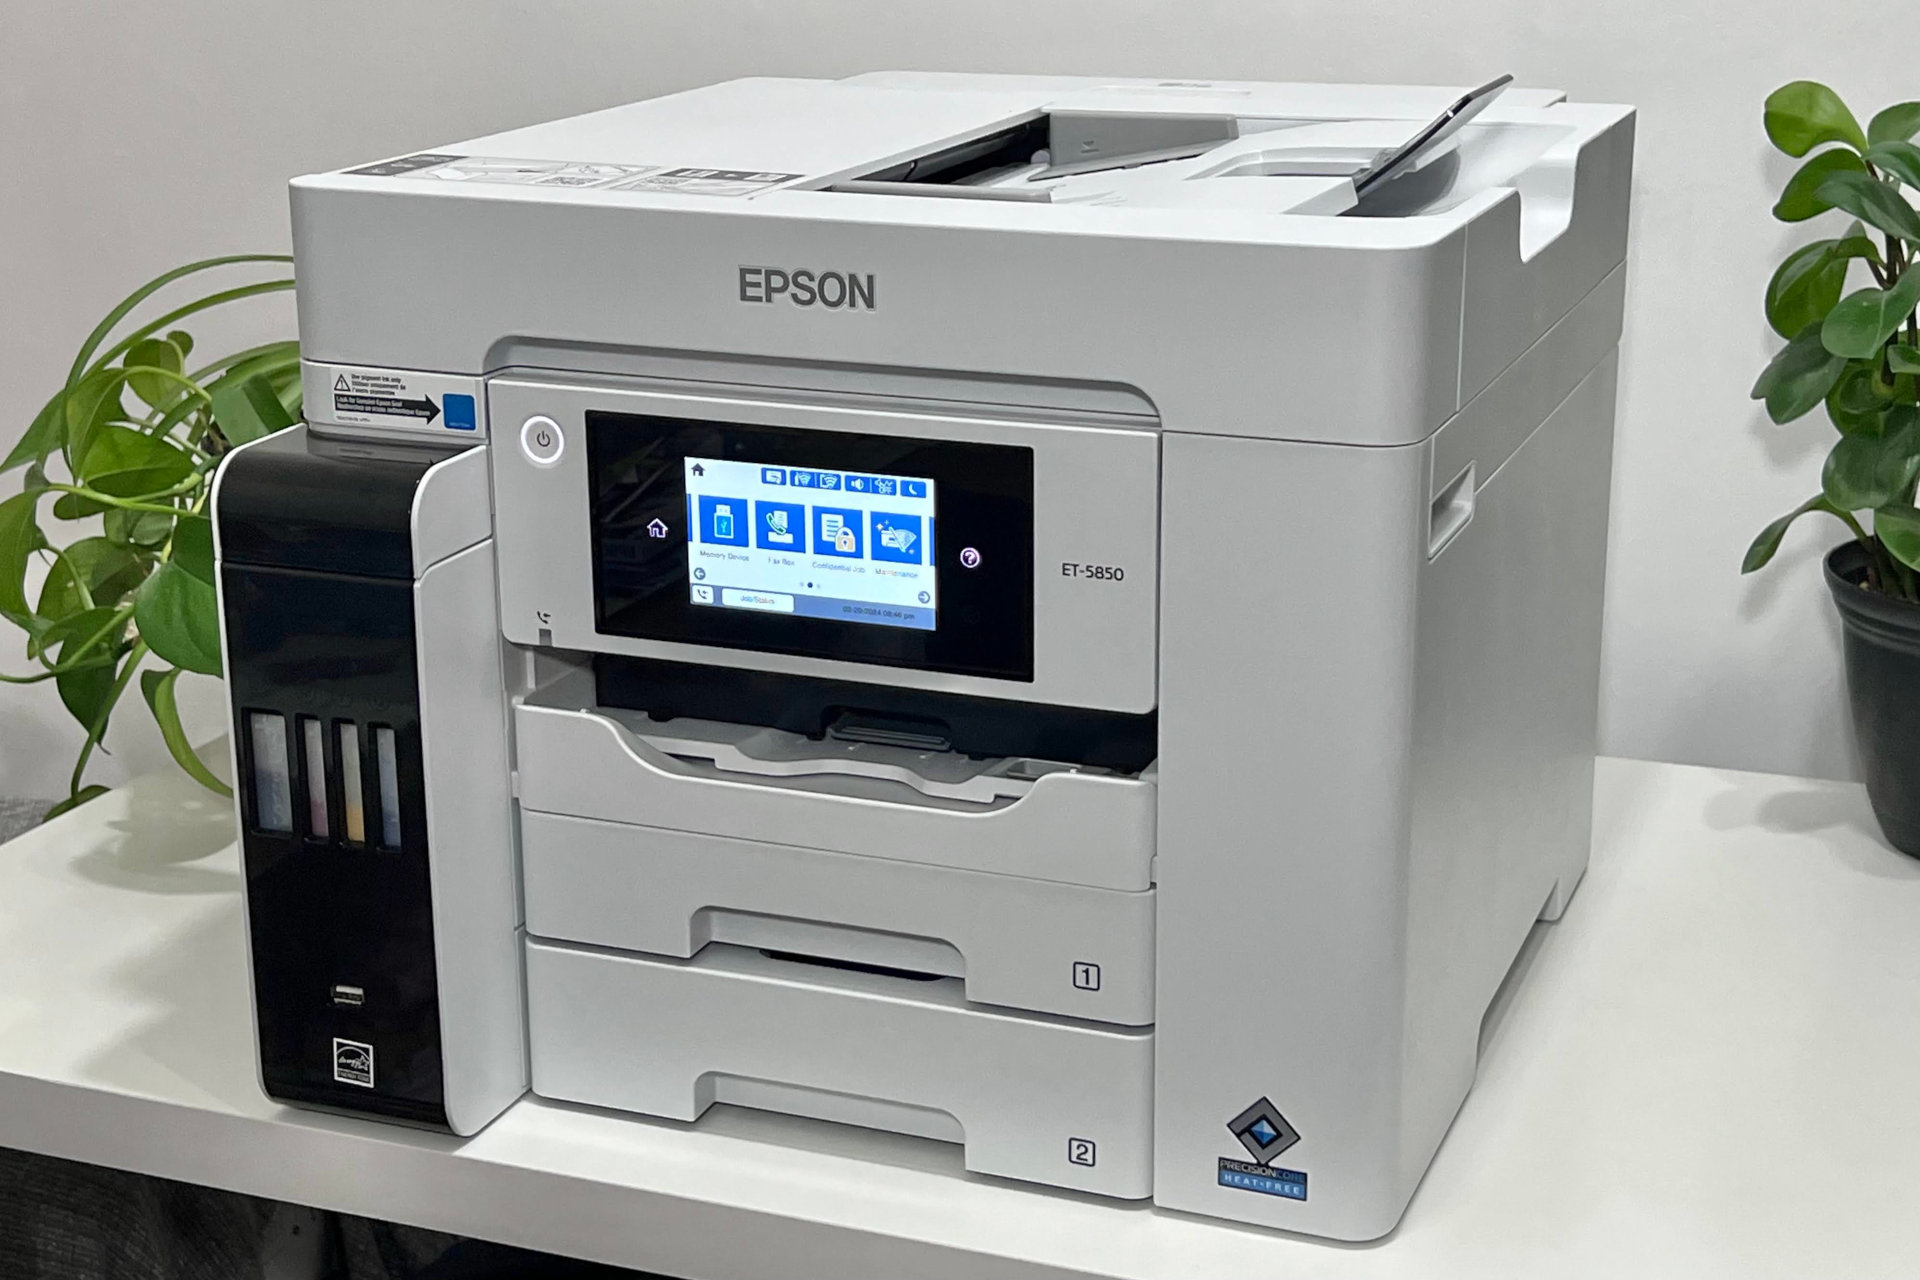 EcoTank Pro ET-5850 اپسون یک چاپگر تجاری بزرگ و سنگین است.